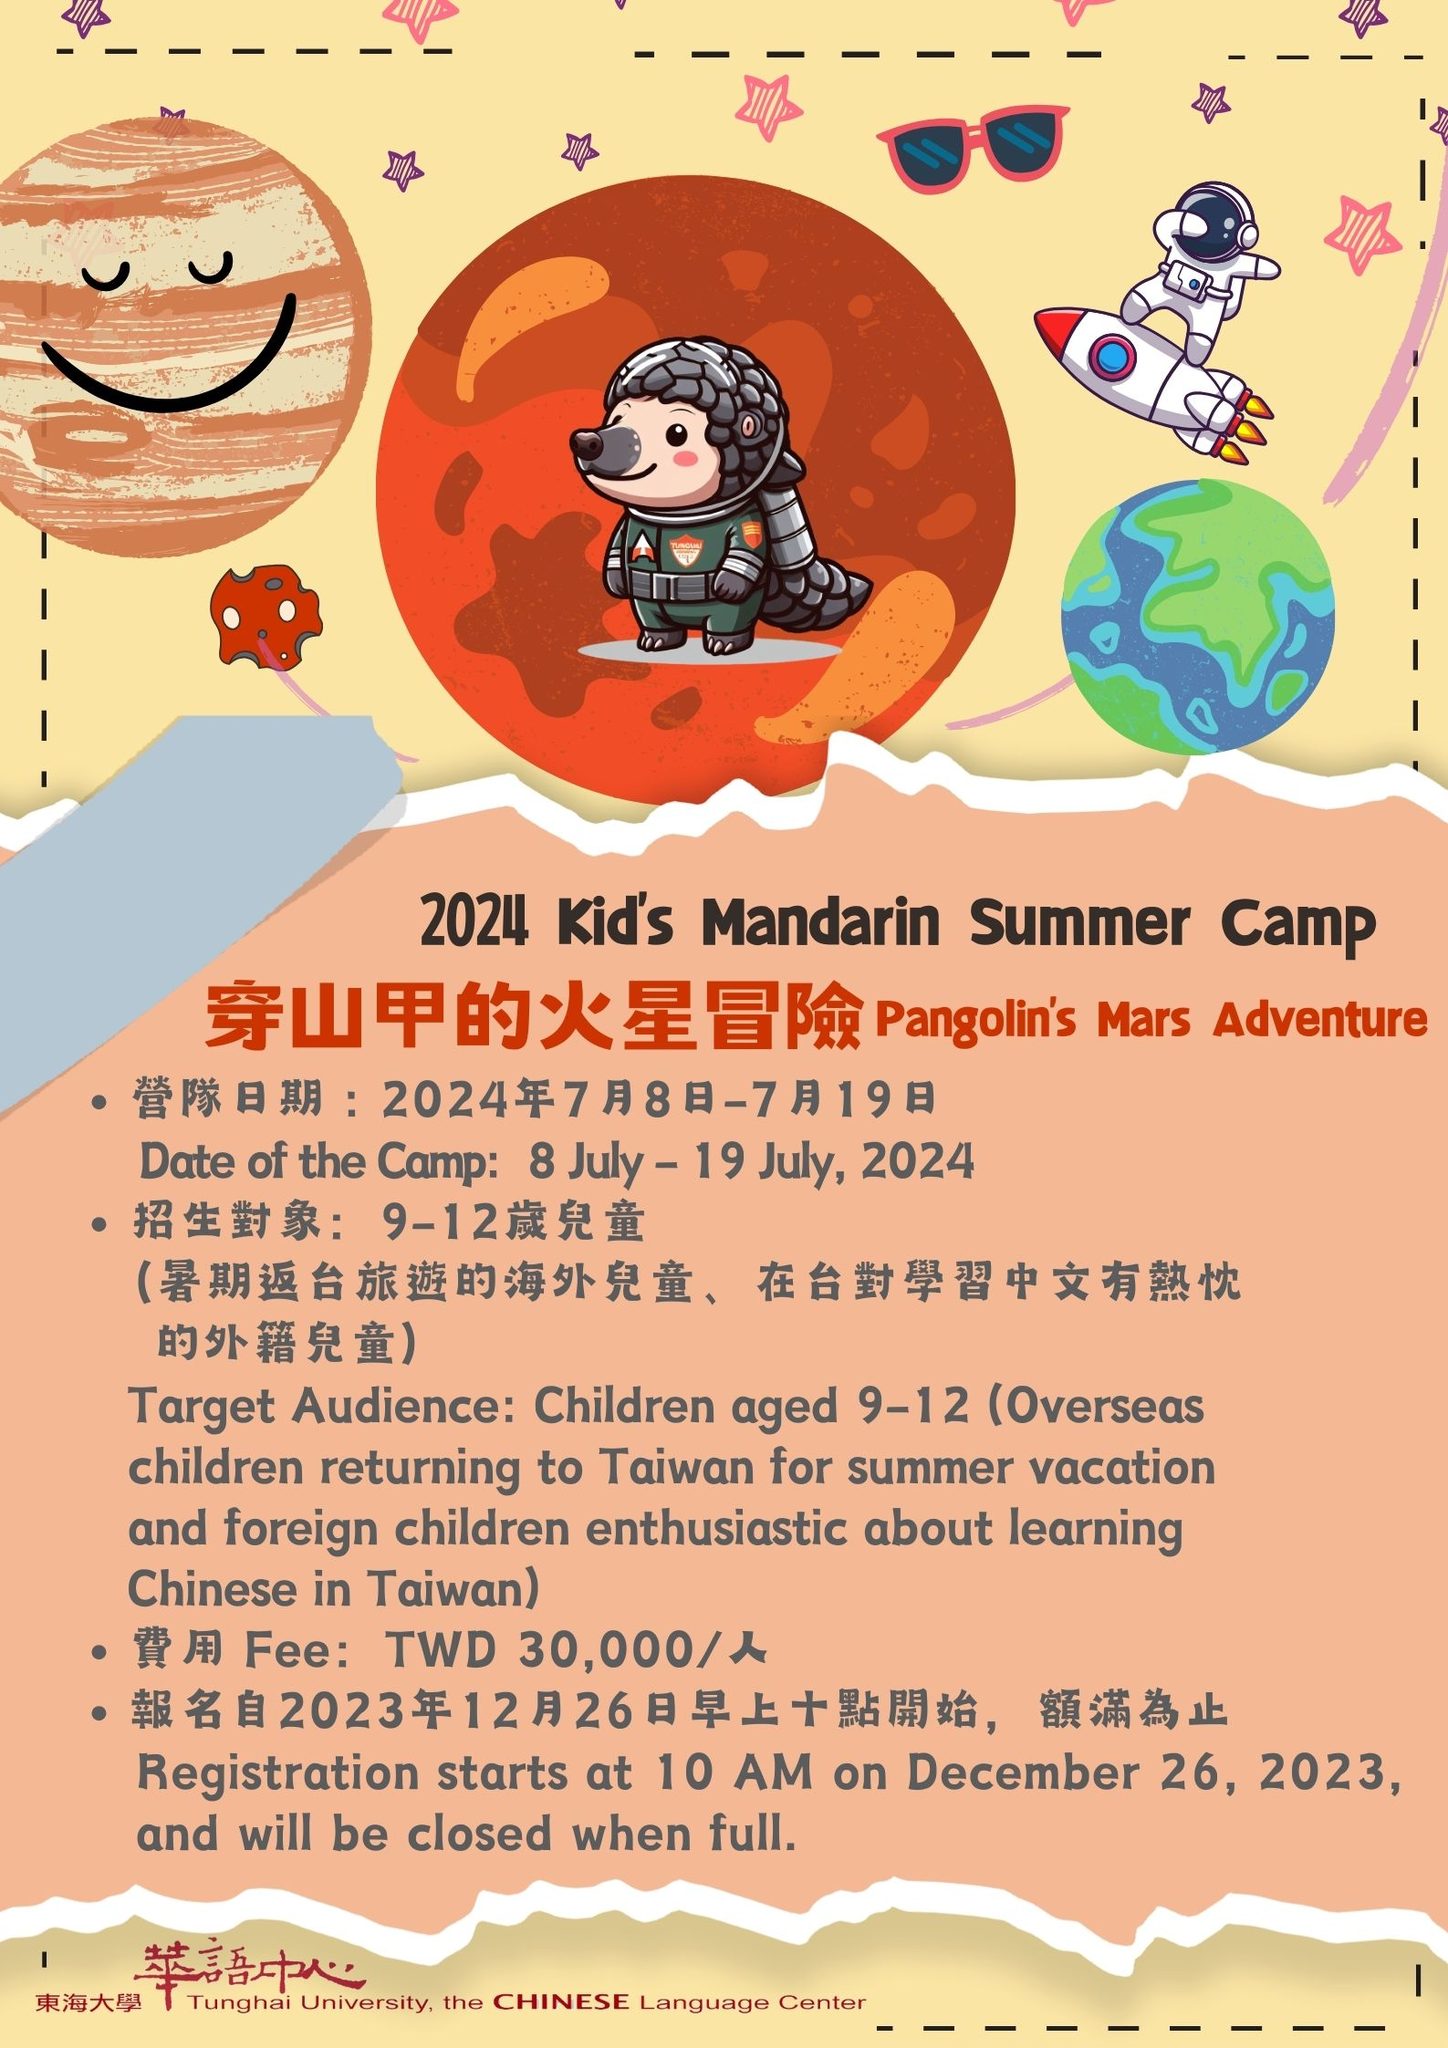 【112.12.15】2024 Kid’s Mandarin Summer Camp –穿山甲的火星冒險 Pangolin’s Mars Adventure